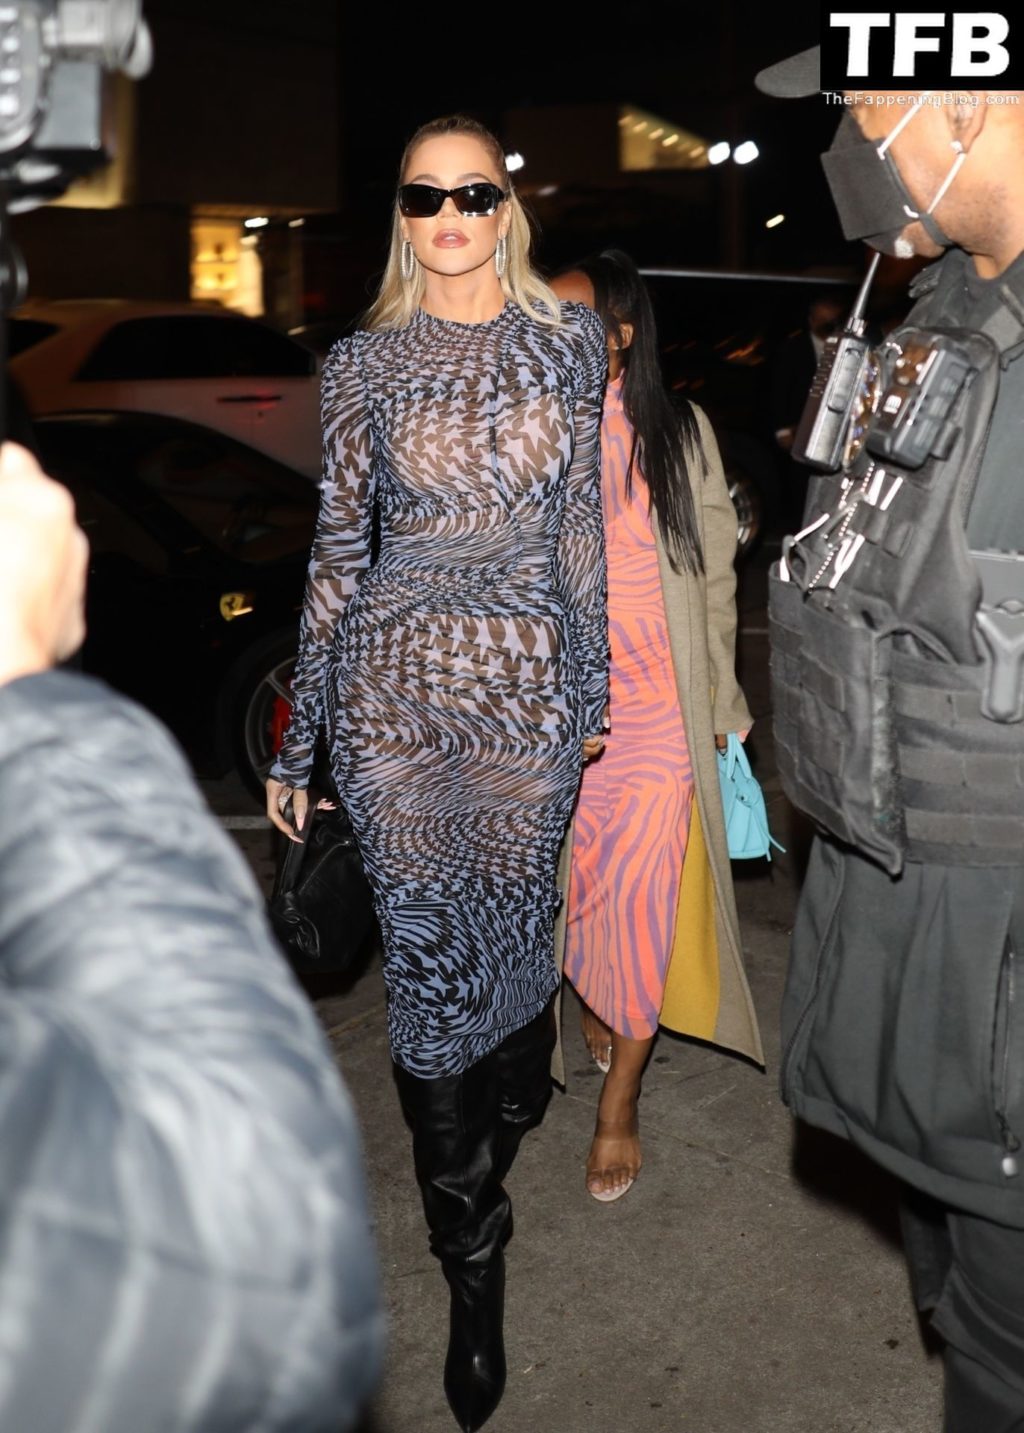 Khloe Kardashian Flaunts Her Curves in West Hollywood (142 Photos)